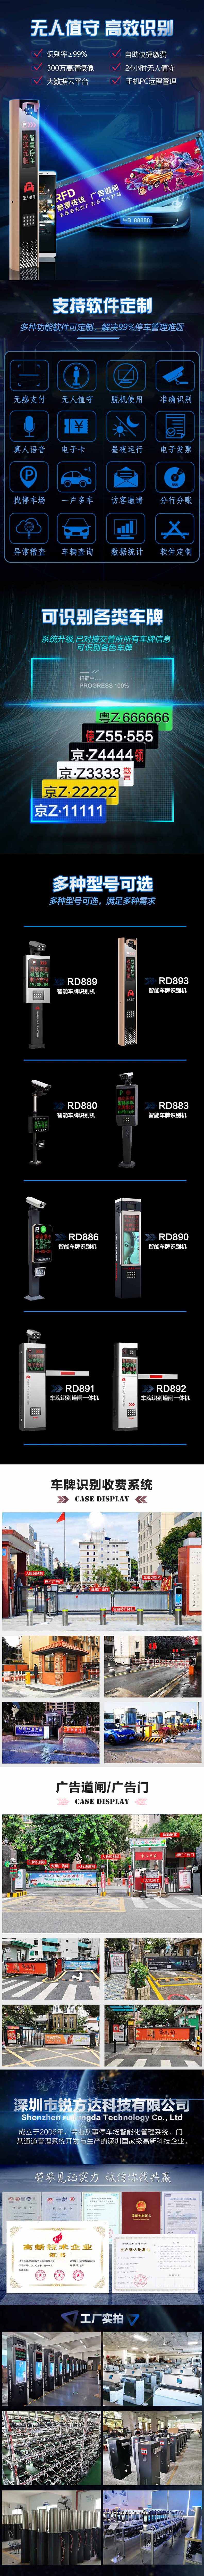 RD893車牌識別系統